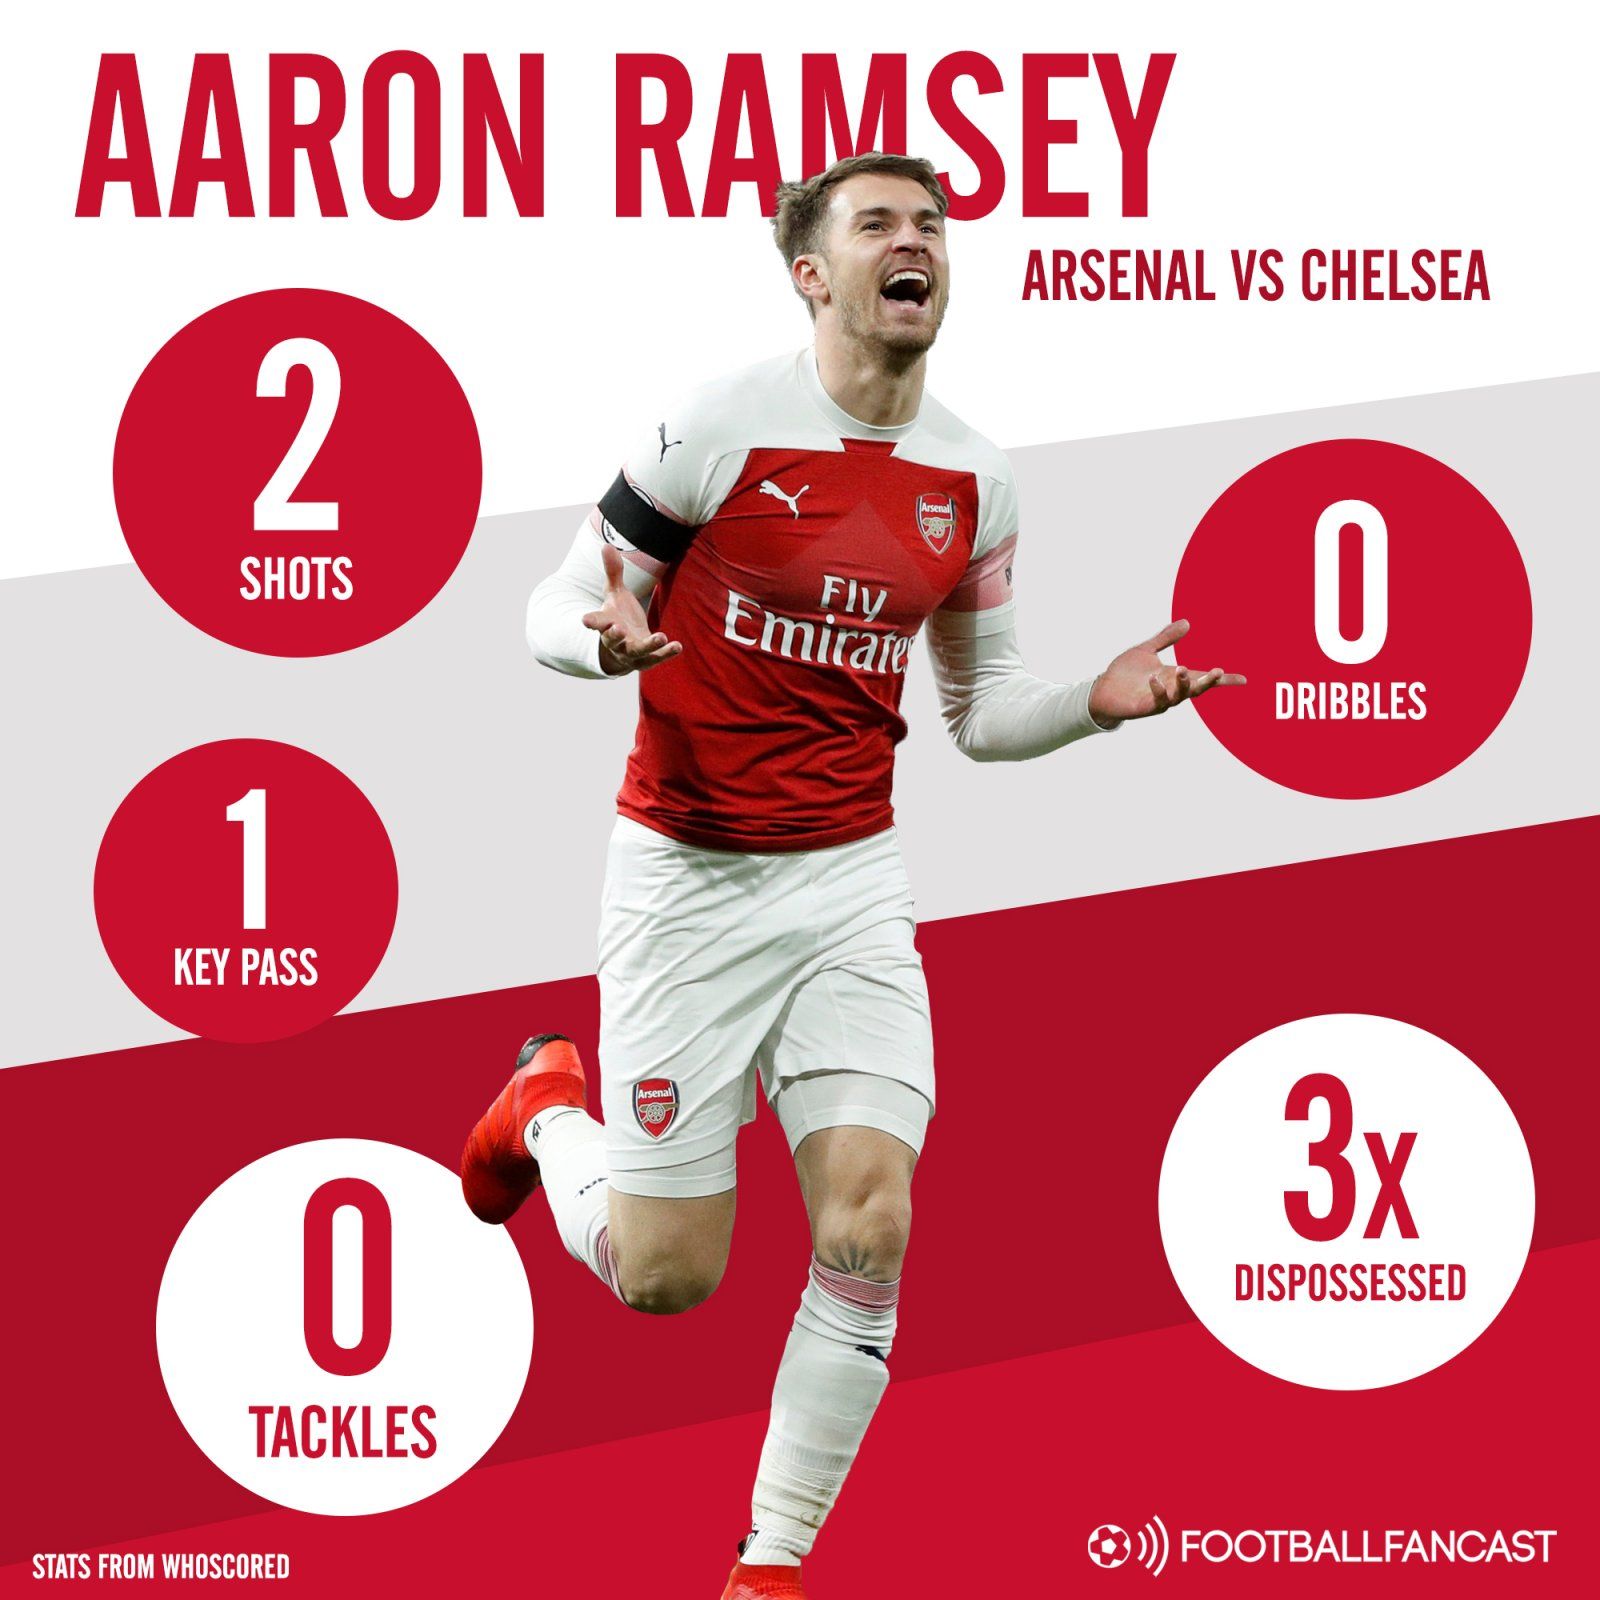 Arsenal midfielder Aaron Ramsey's stats vs Chelsea